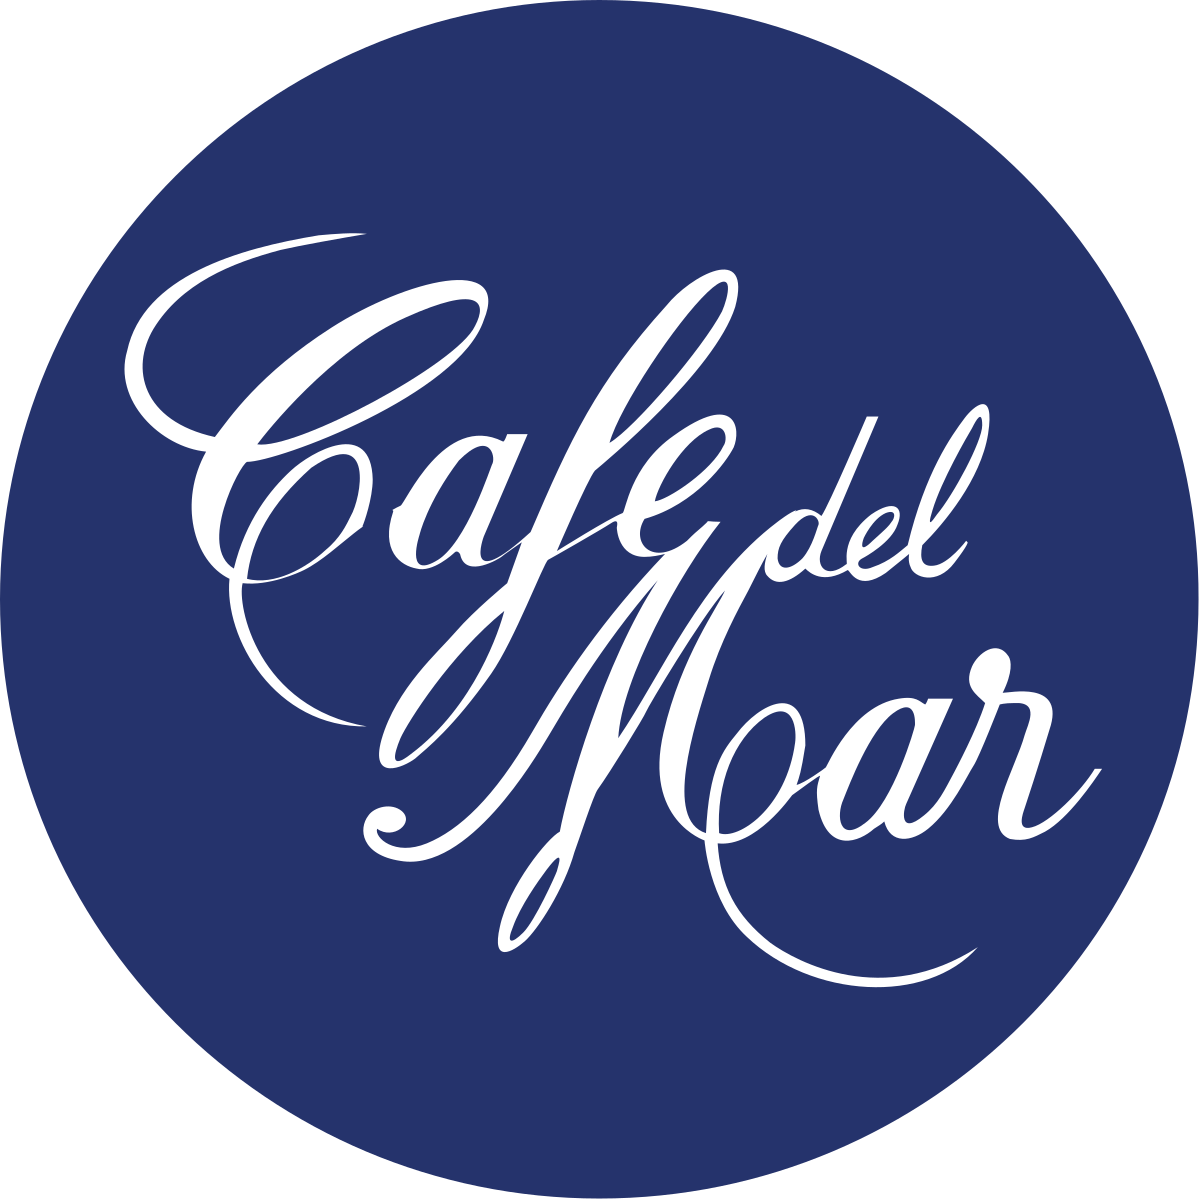 cafe del mar logo